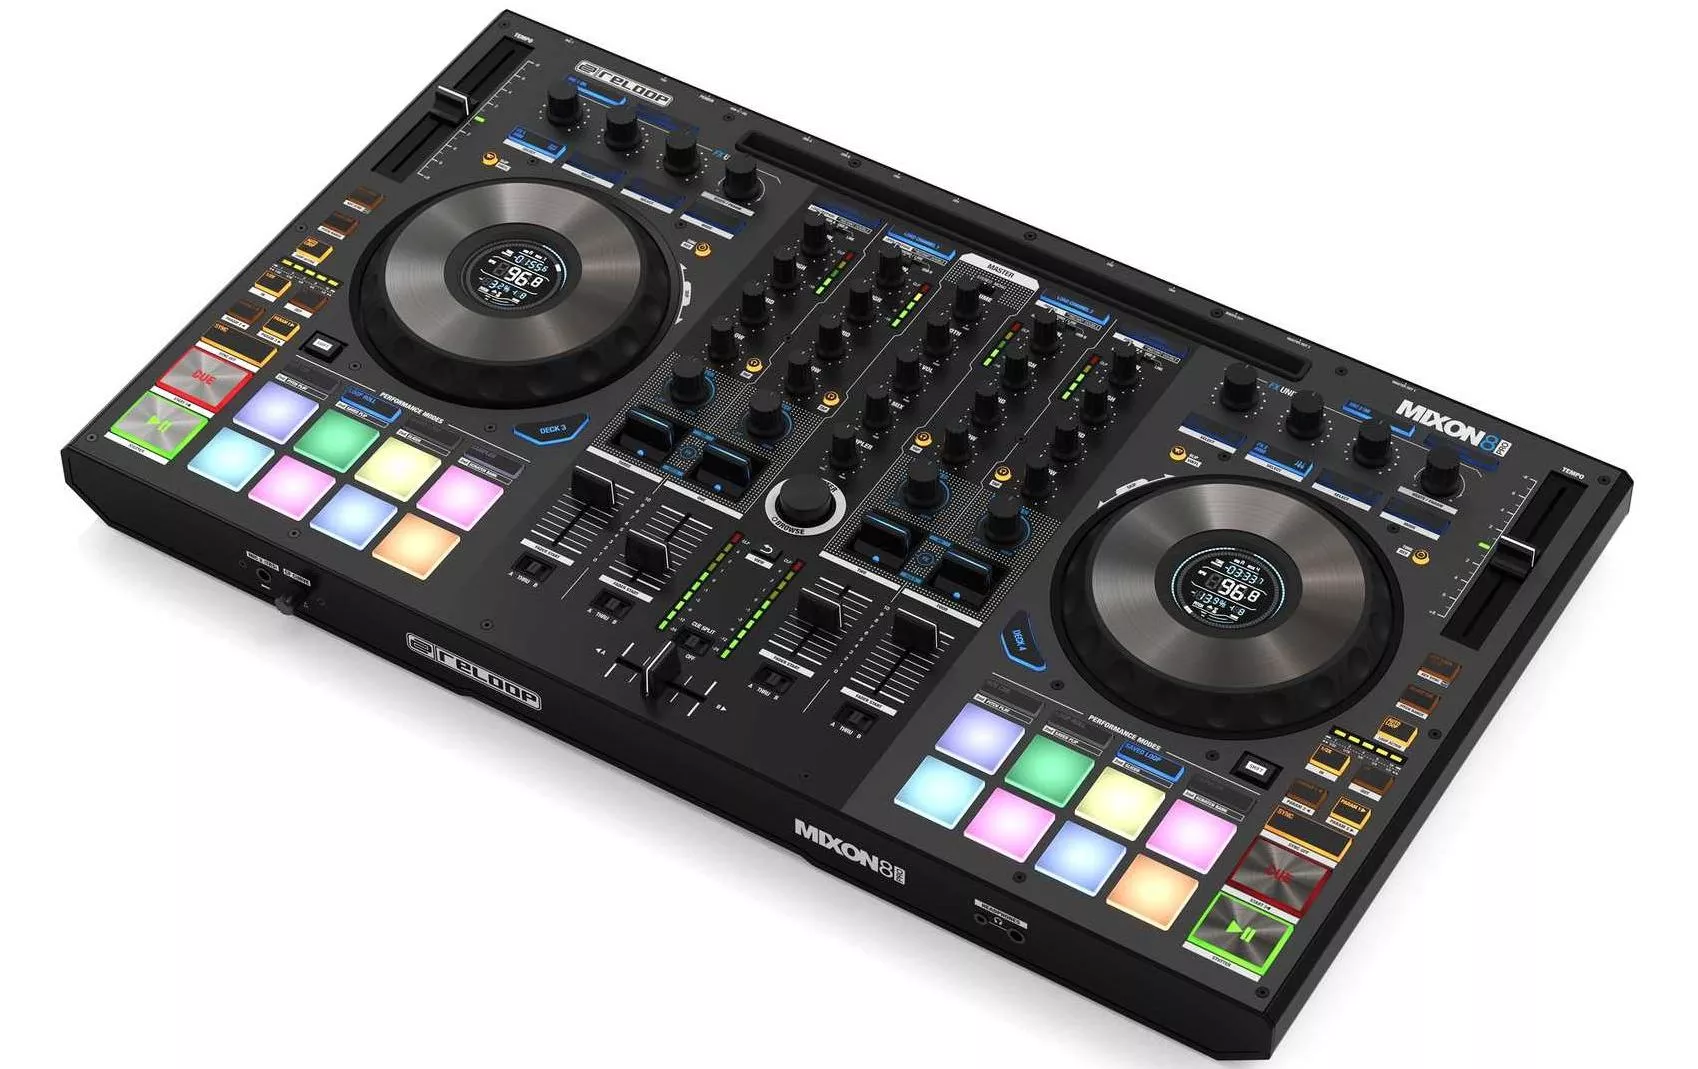 DJ Controller Mixon 8 Pro